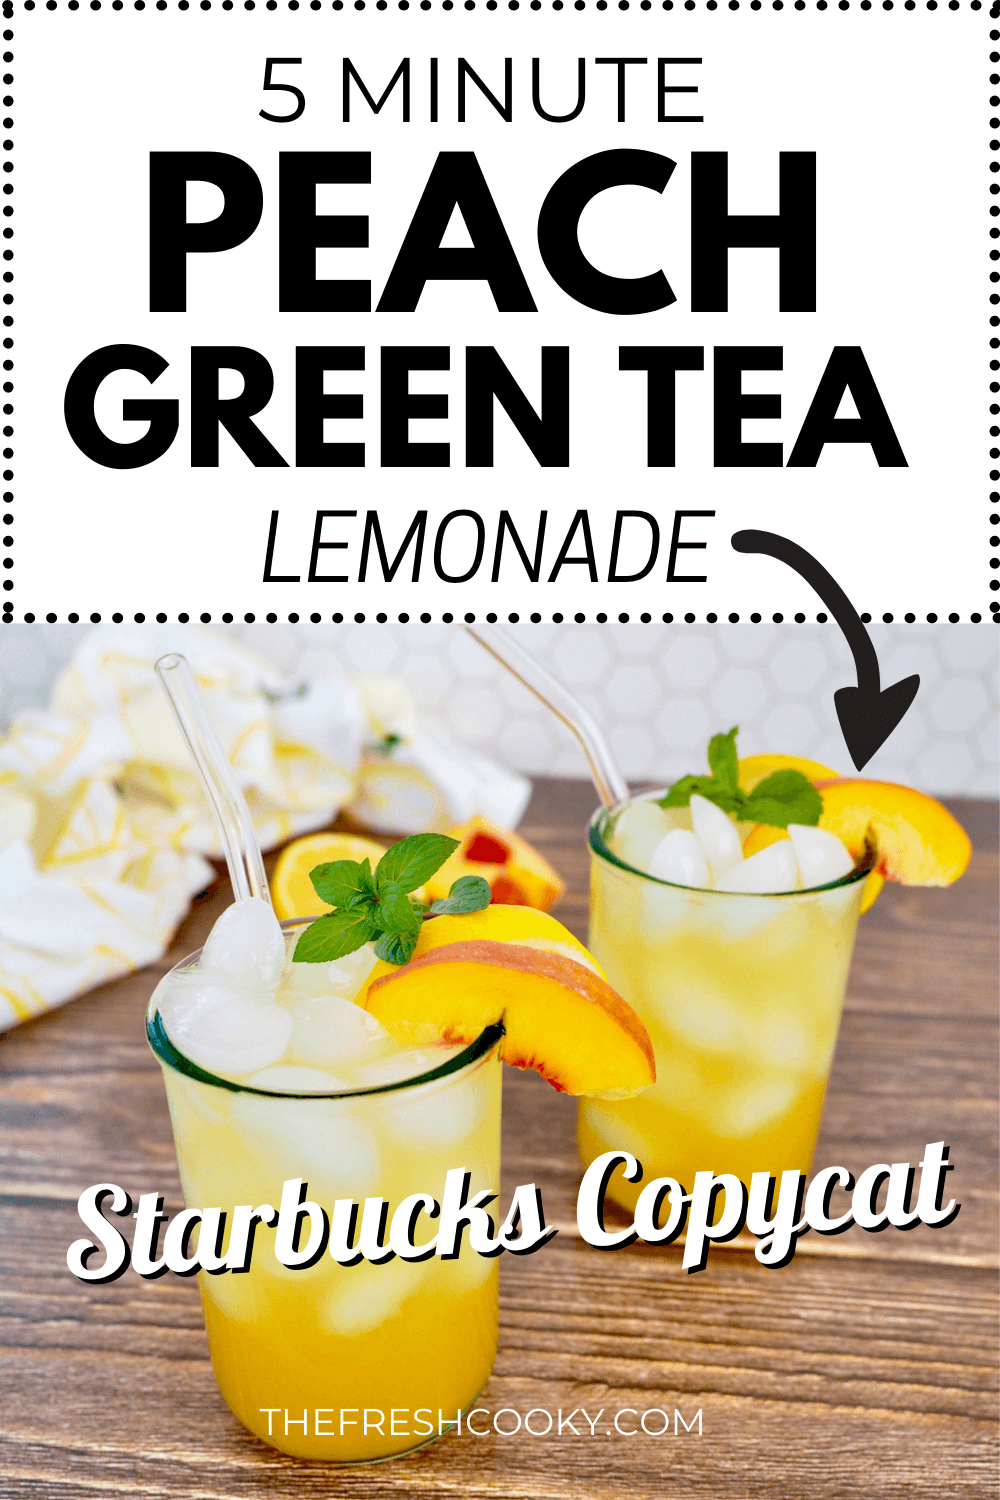 Two glasses of iced Peach Green tea lemonade a Starbucks copycat recipe for pinning.